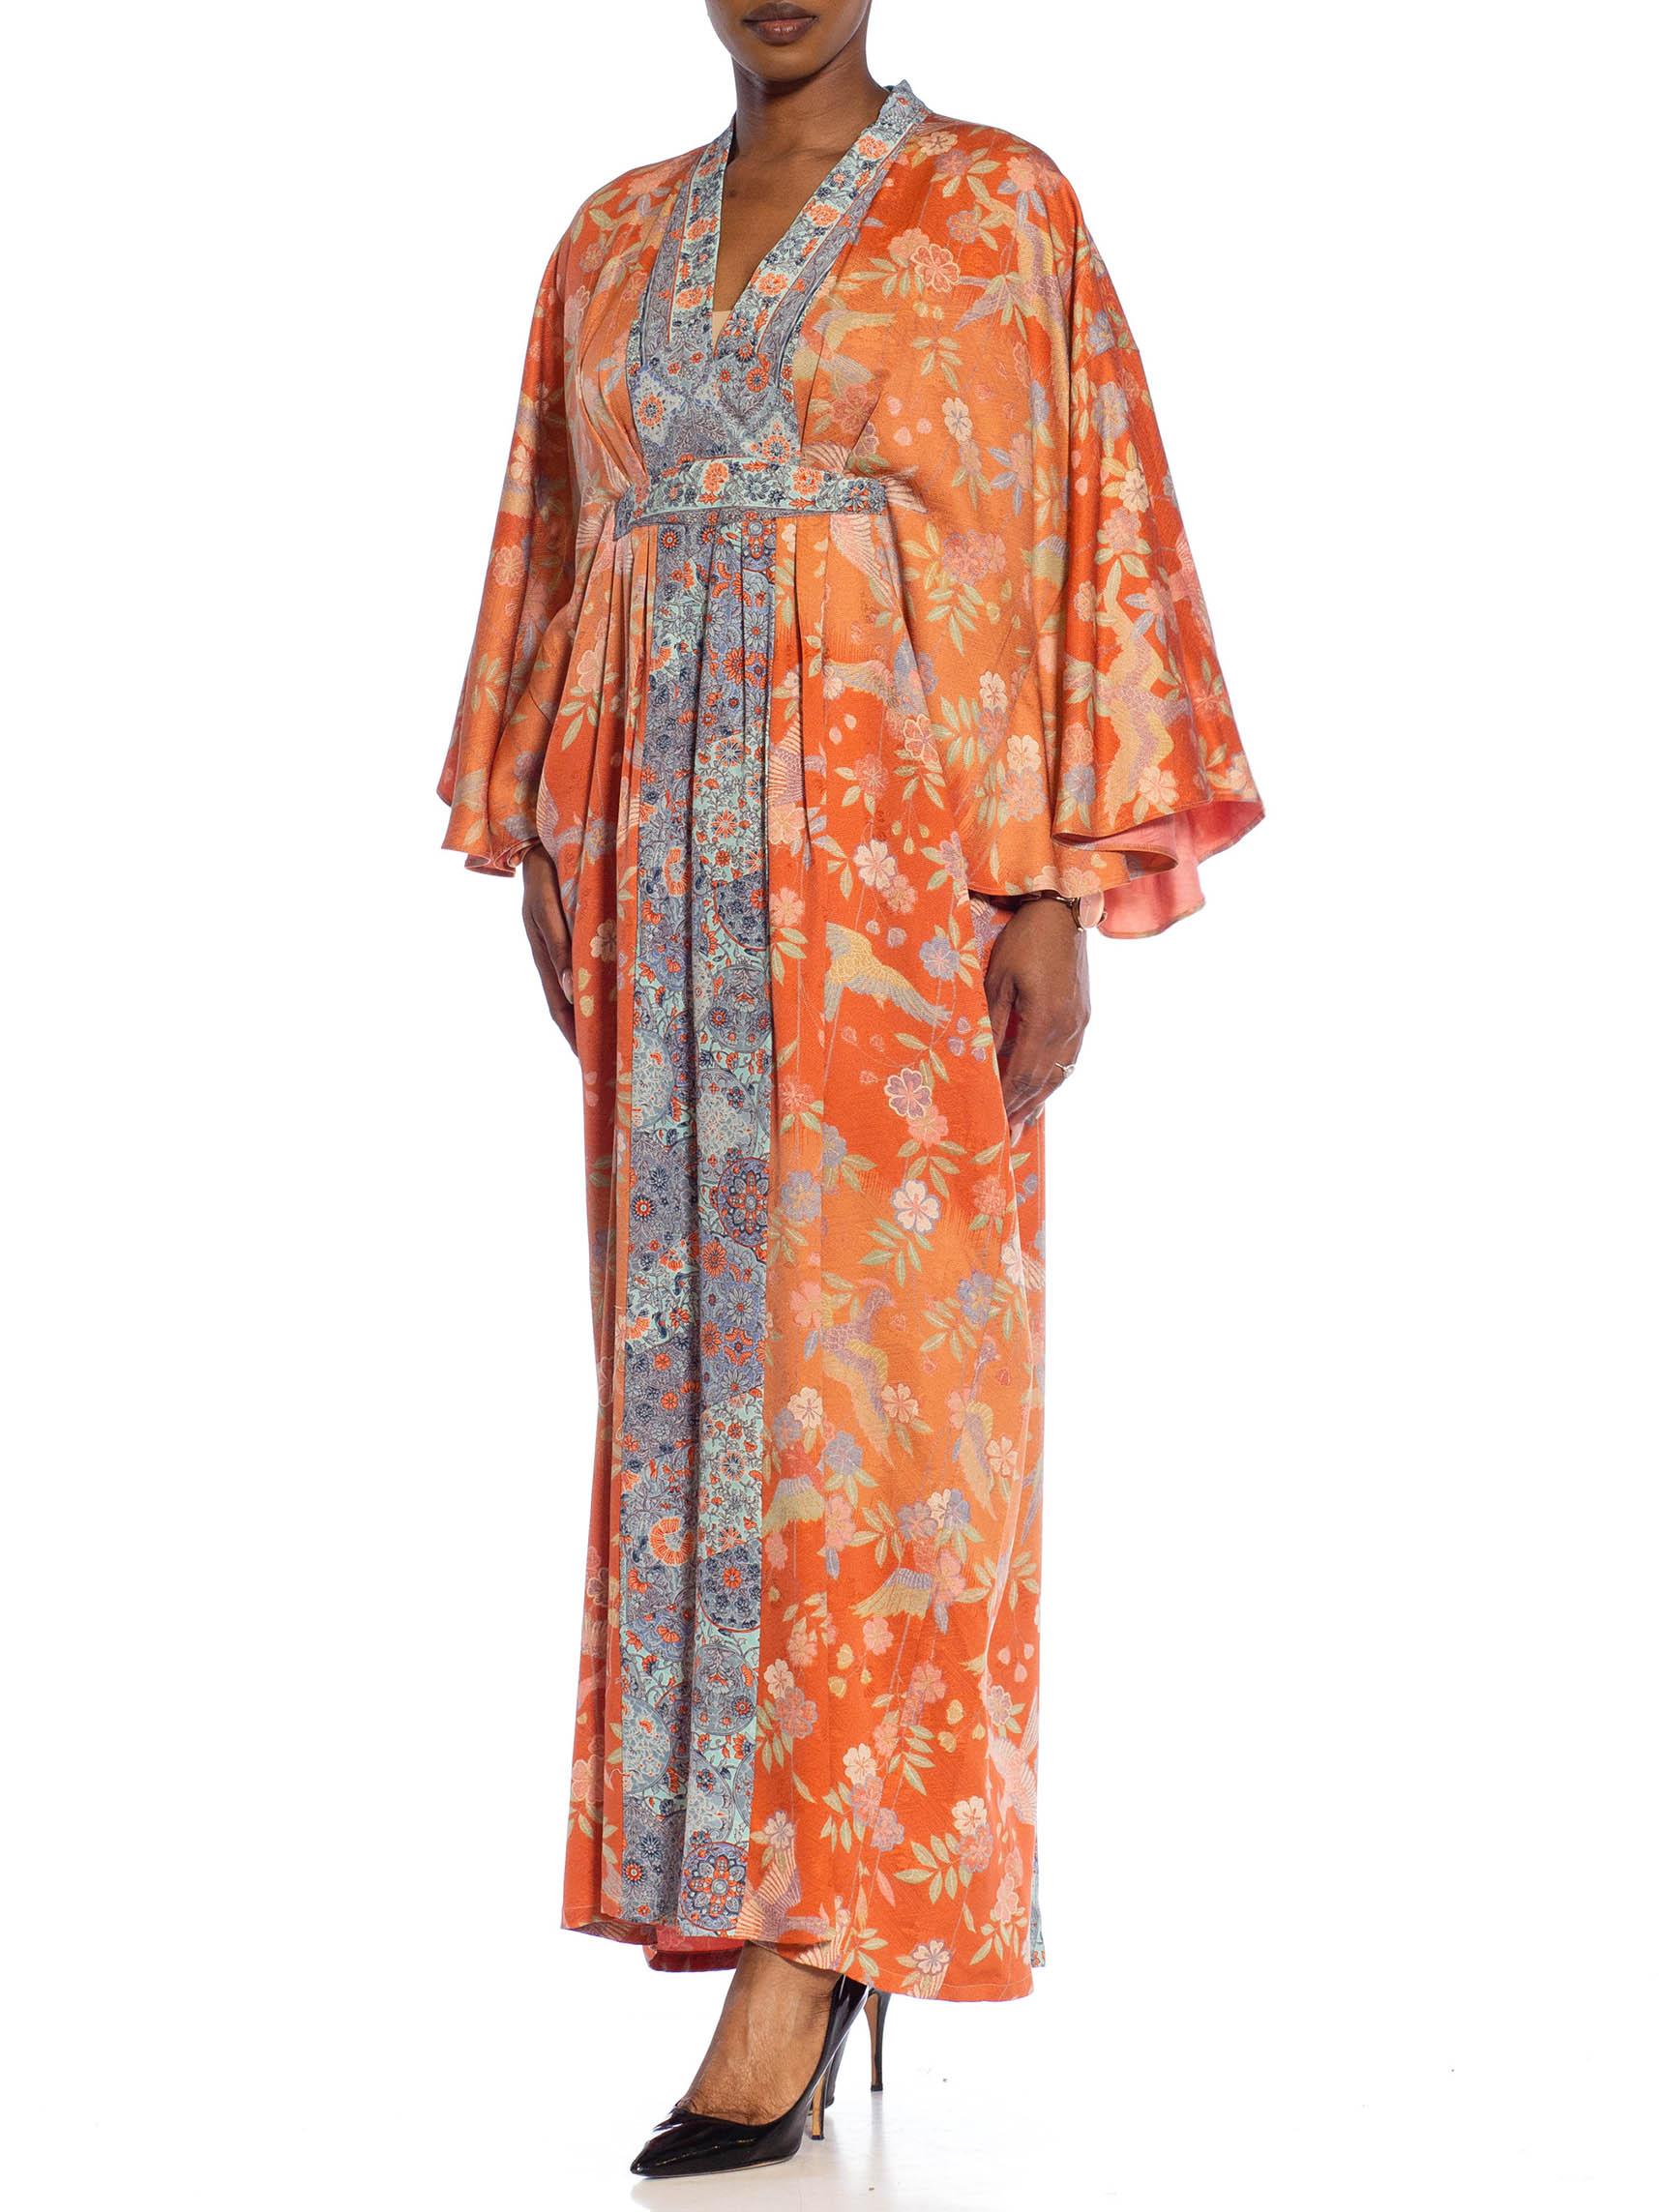 MORPHEW COLLECTION Orange Ombré Floral Japanese Kimono Silk Kaftan 2